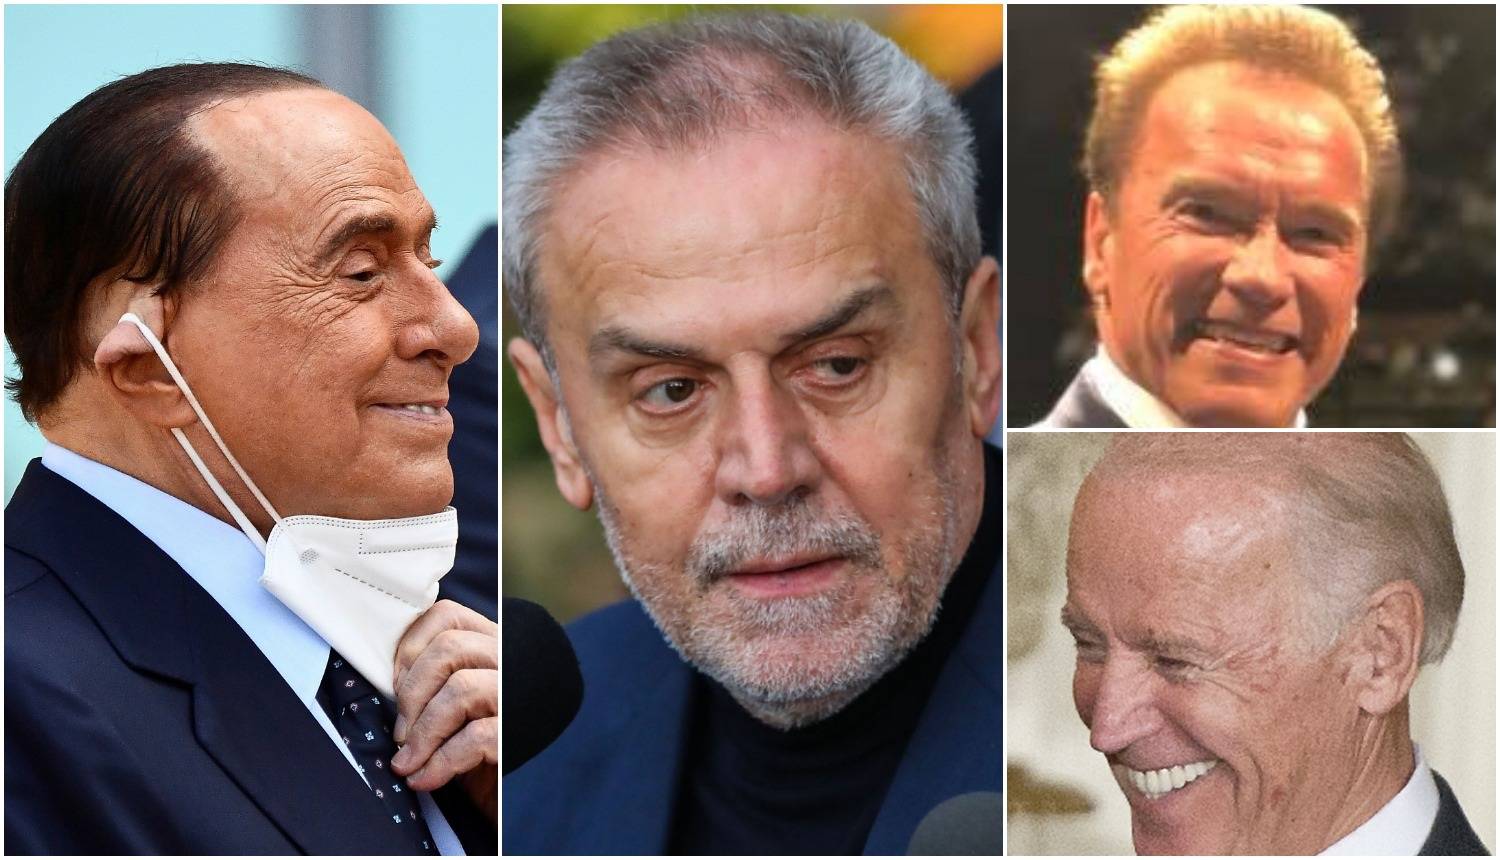 Bore se s borama: Bandić kao grinč, Berlusconi više ne može pomicati lice, Biden se zategnuo